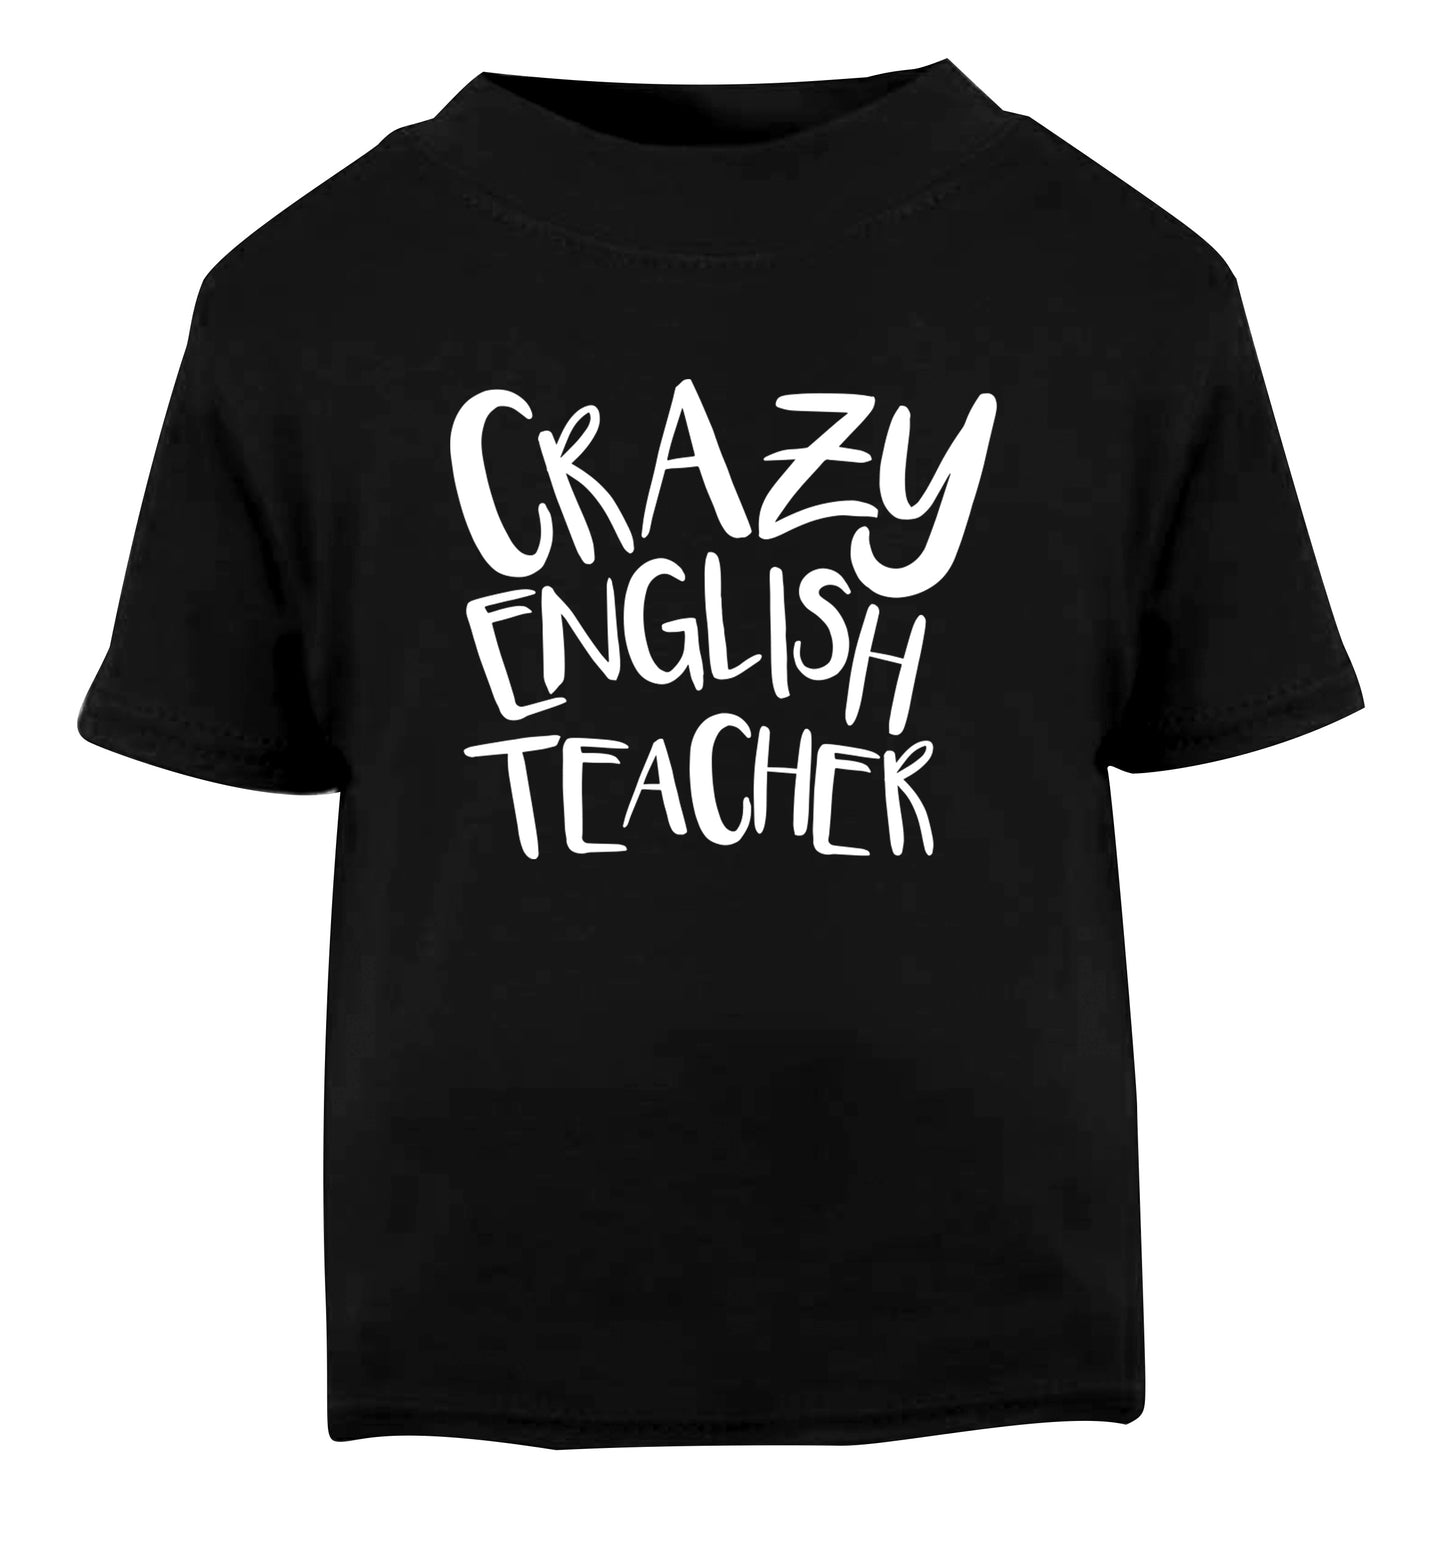 Crazy English Teacher Black Baby Toddler Tshirt 2 years